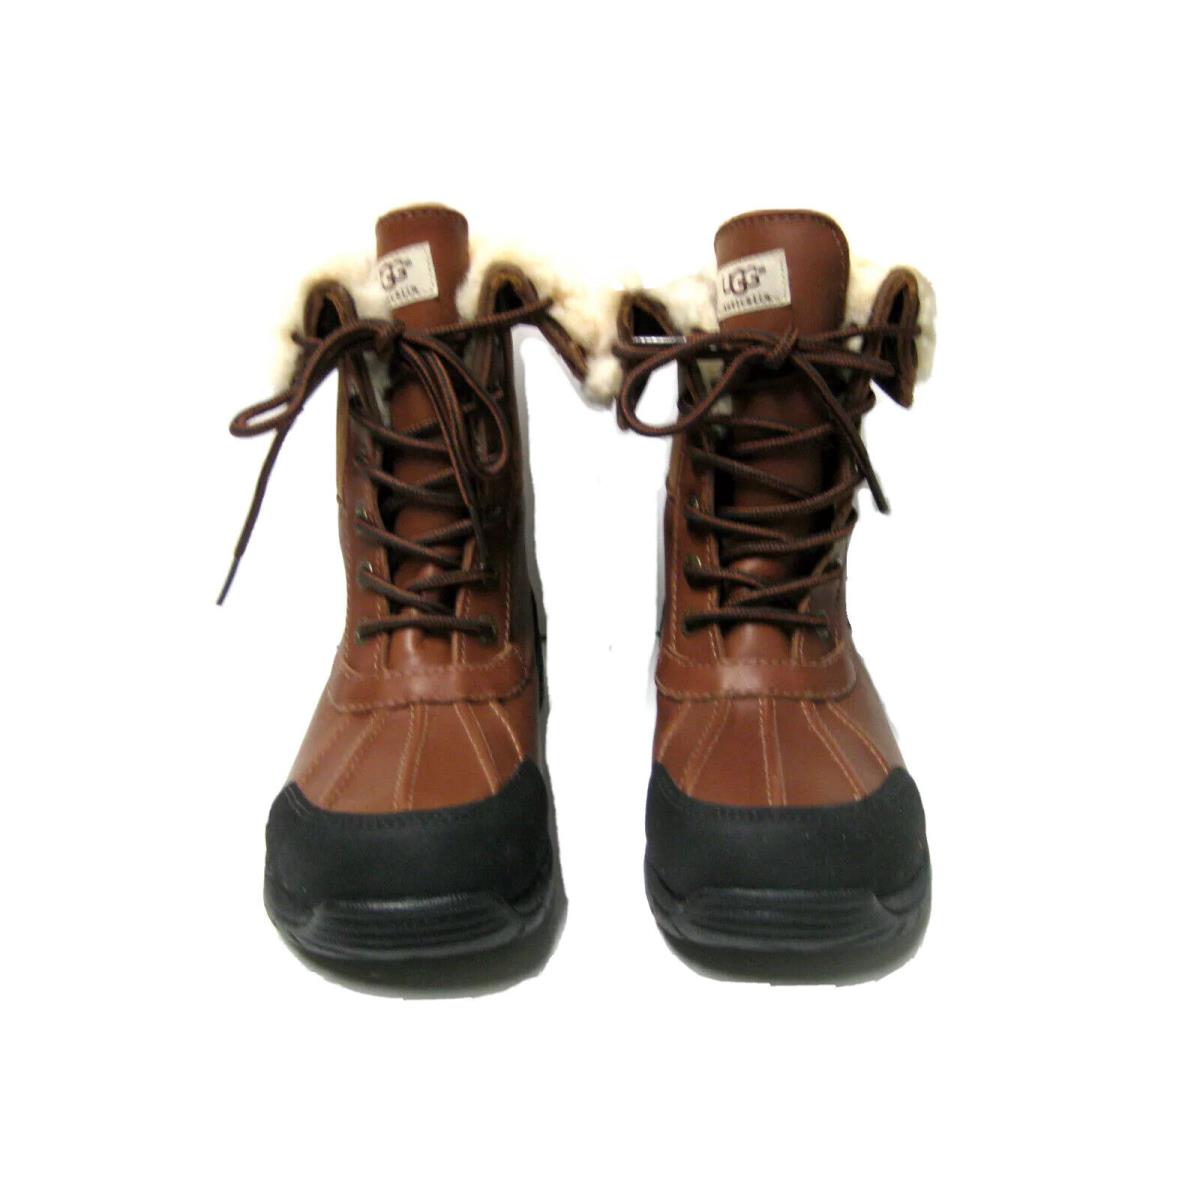 Ugg Butte Men Winter Boots Leather Worchester US 9.5 / UK 8.5 / EU 42.5 - WORCHESTER